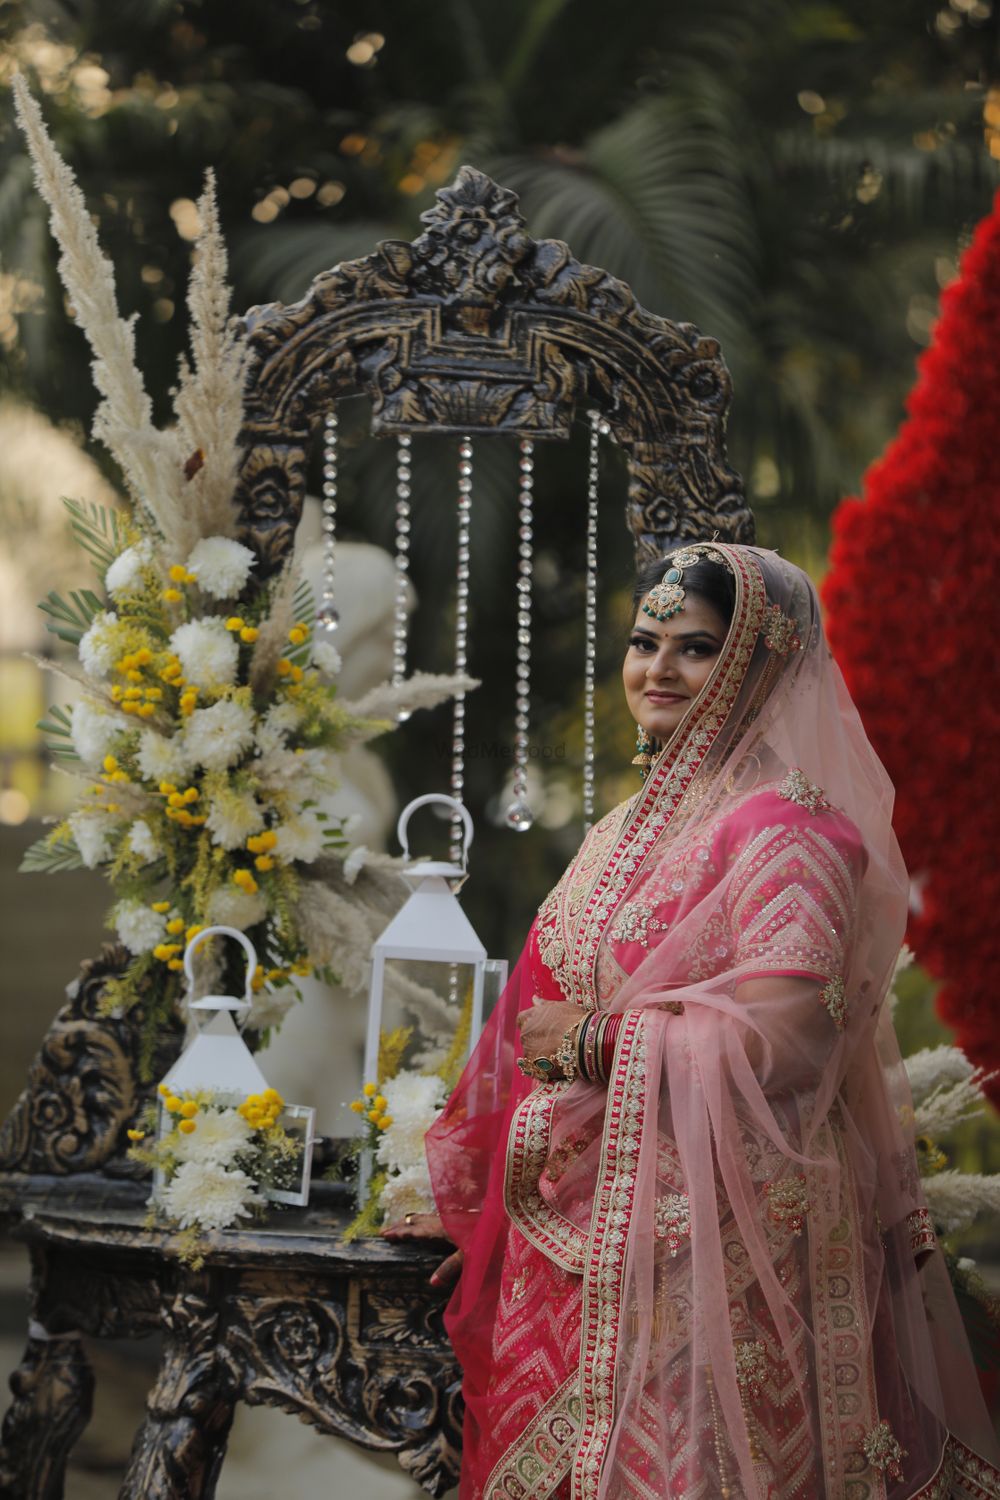 Photo From Sanjana weds Ashish - By The Decor Inc.